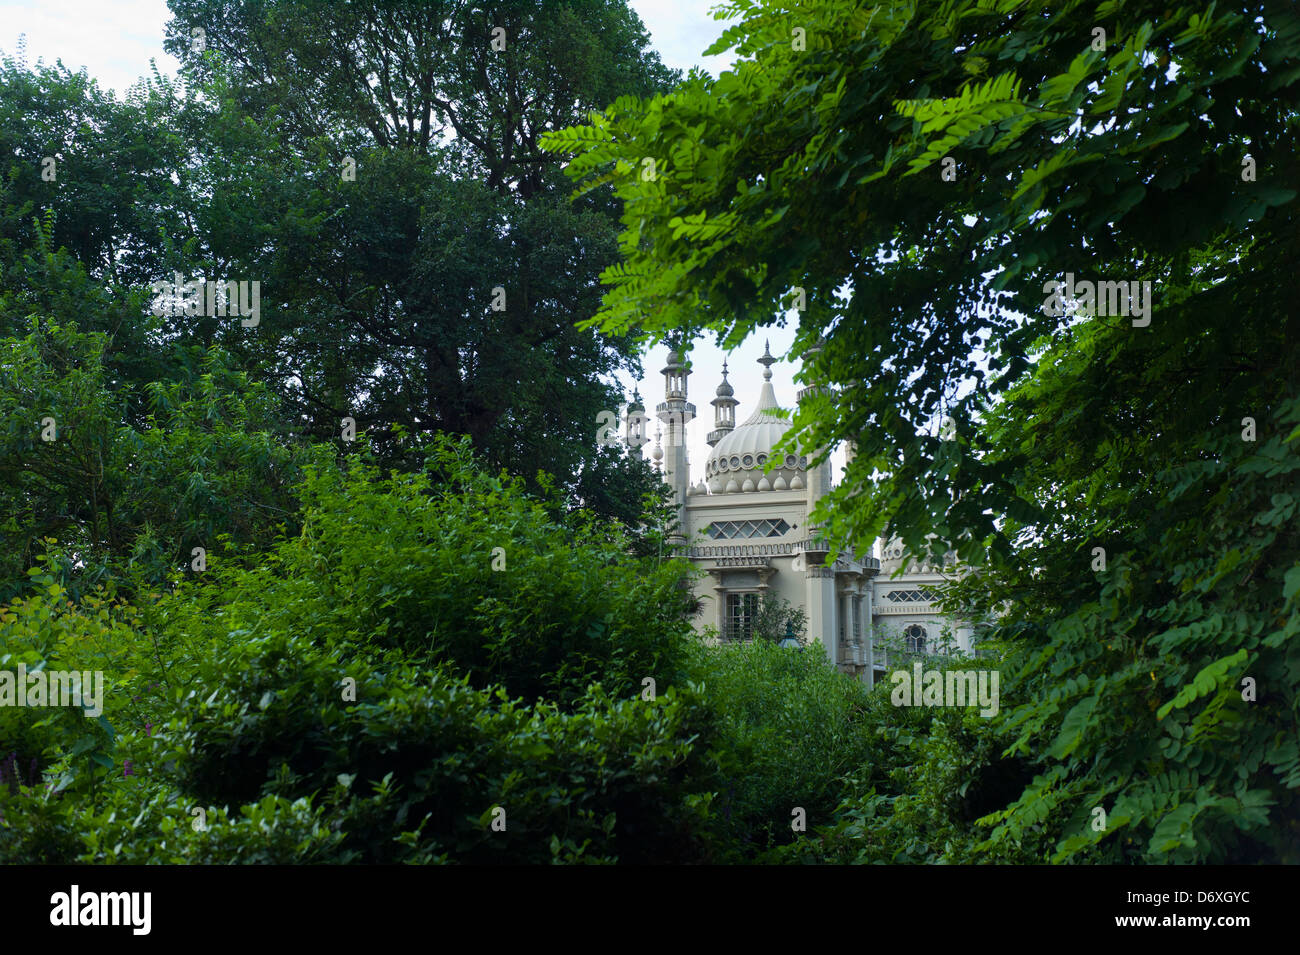 Brighton Royal pavilion through trees, unusual viewpoint Stock Photo